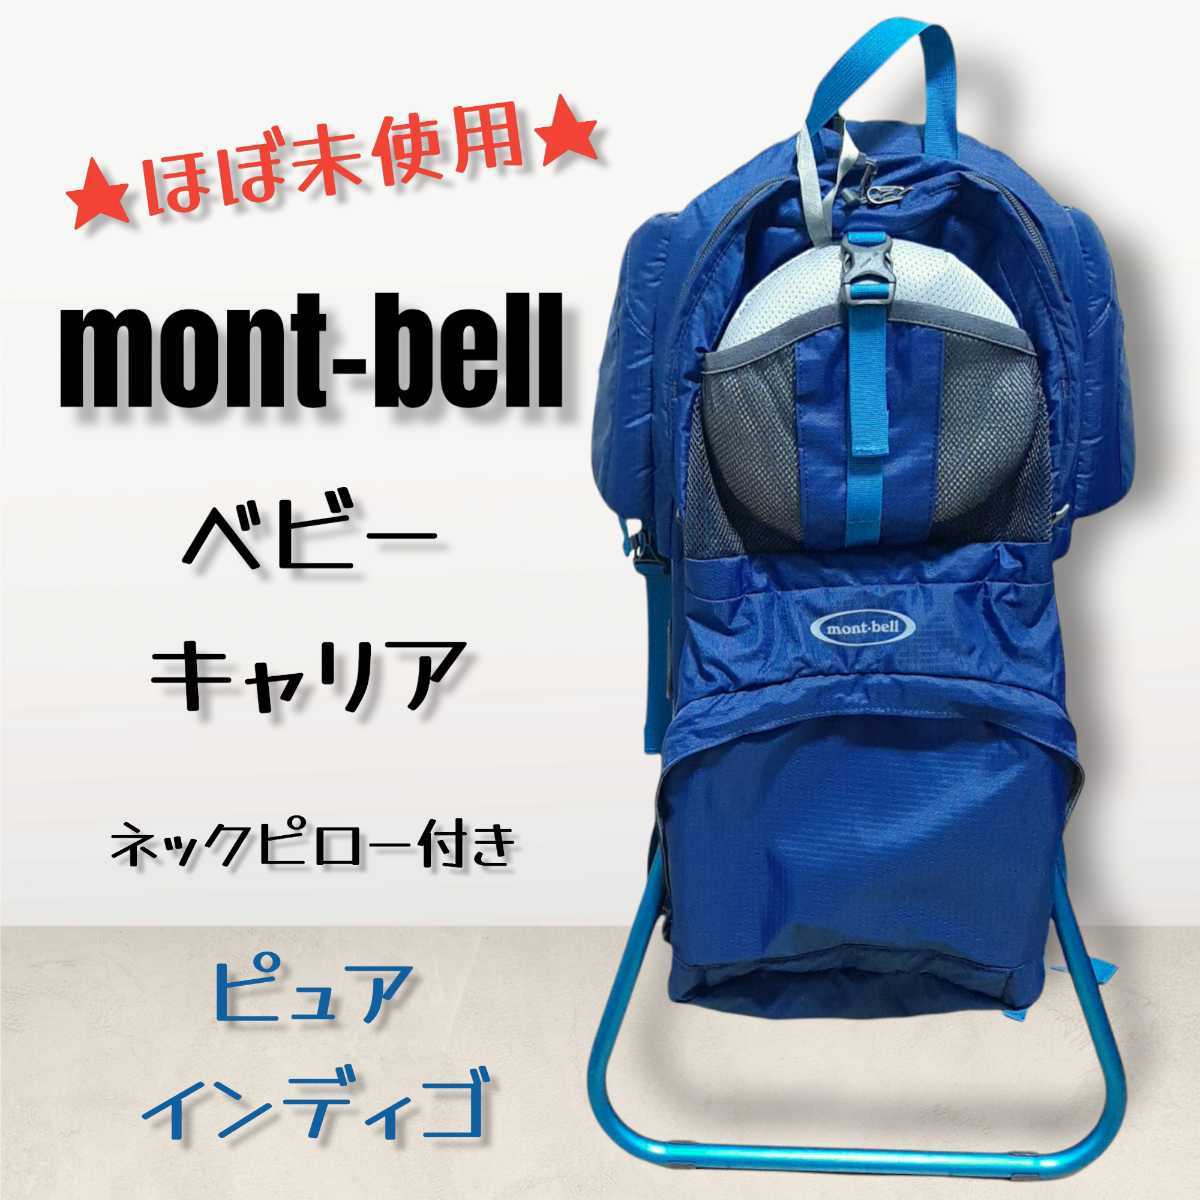 mont-bell モンベル 背負子 ベビーキャリア ベビーキャリー バック